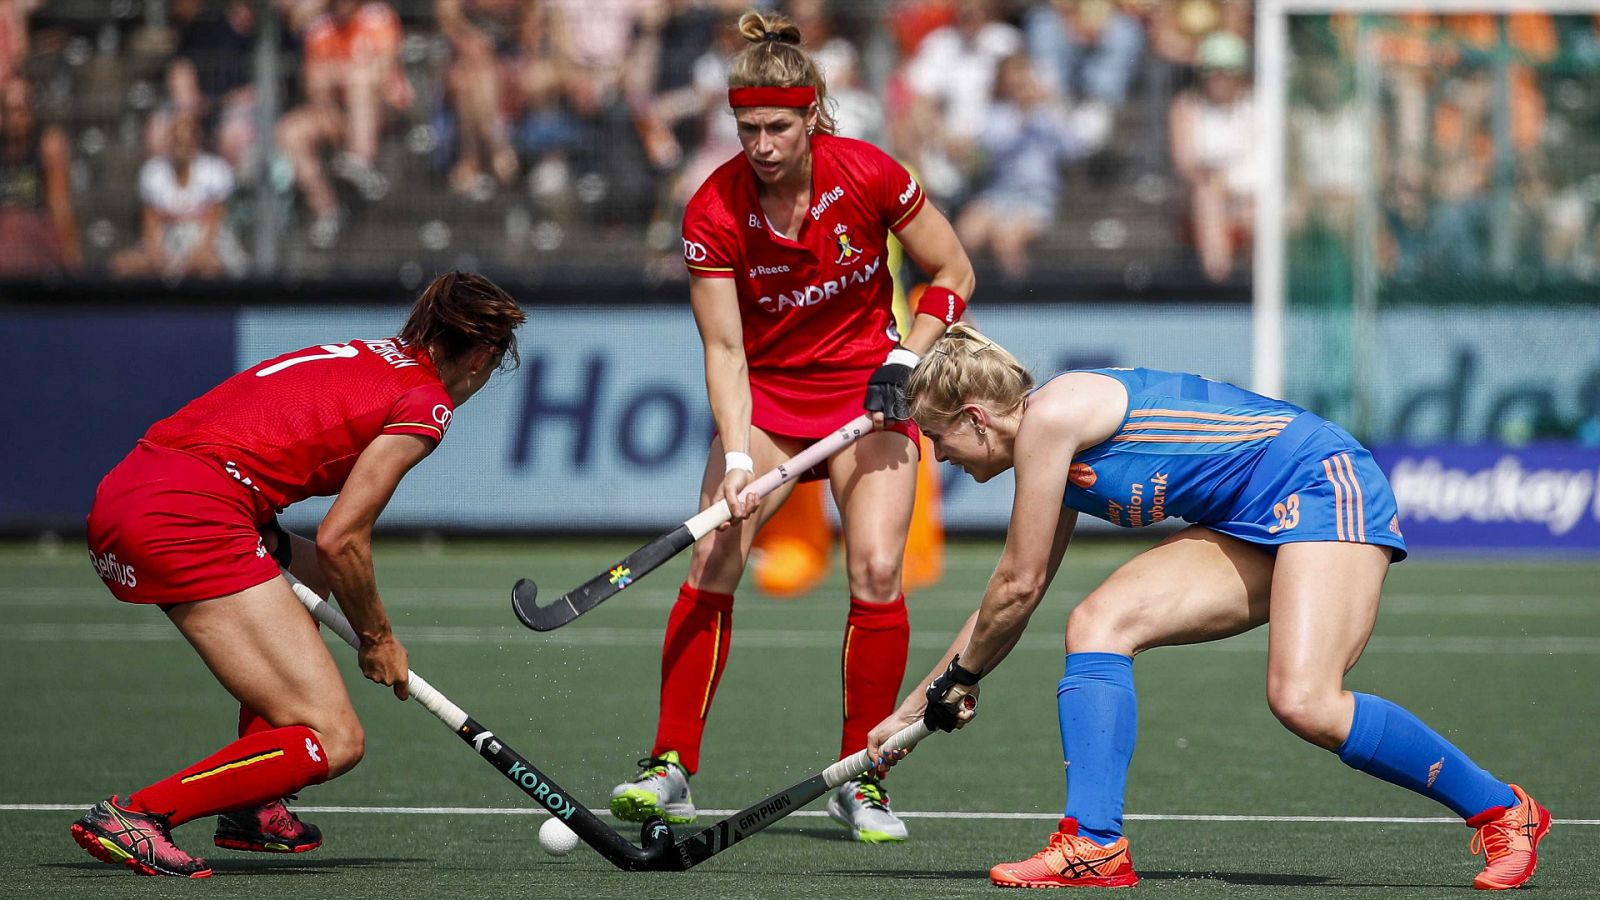 Hockey hierba - Campeonato de Europa femenino. 1ª semifinal: Holanda - Bélgica